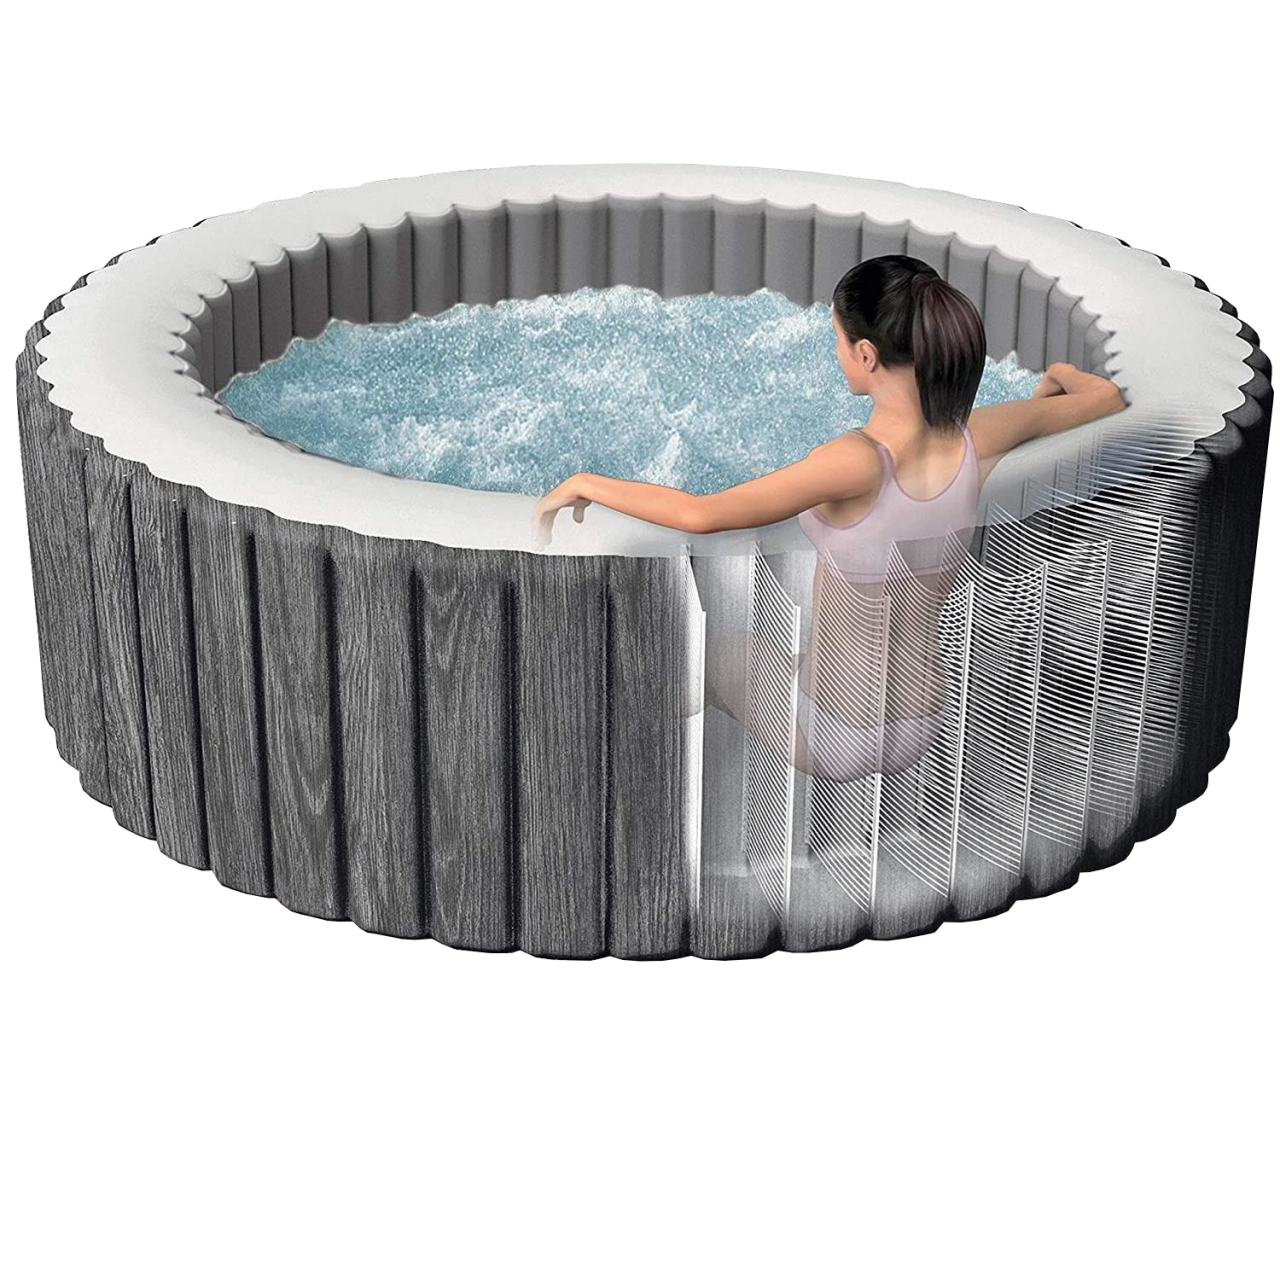 Intex 28440 Whirlpool Pure SPA Bubble Massage GreyWood 196x71 cm aufblasbar